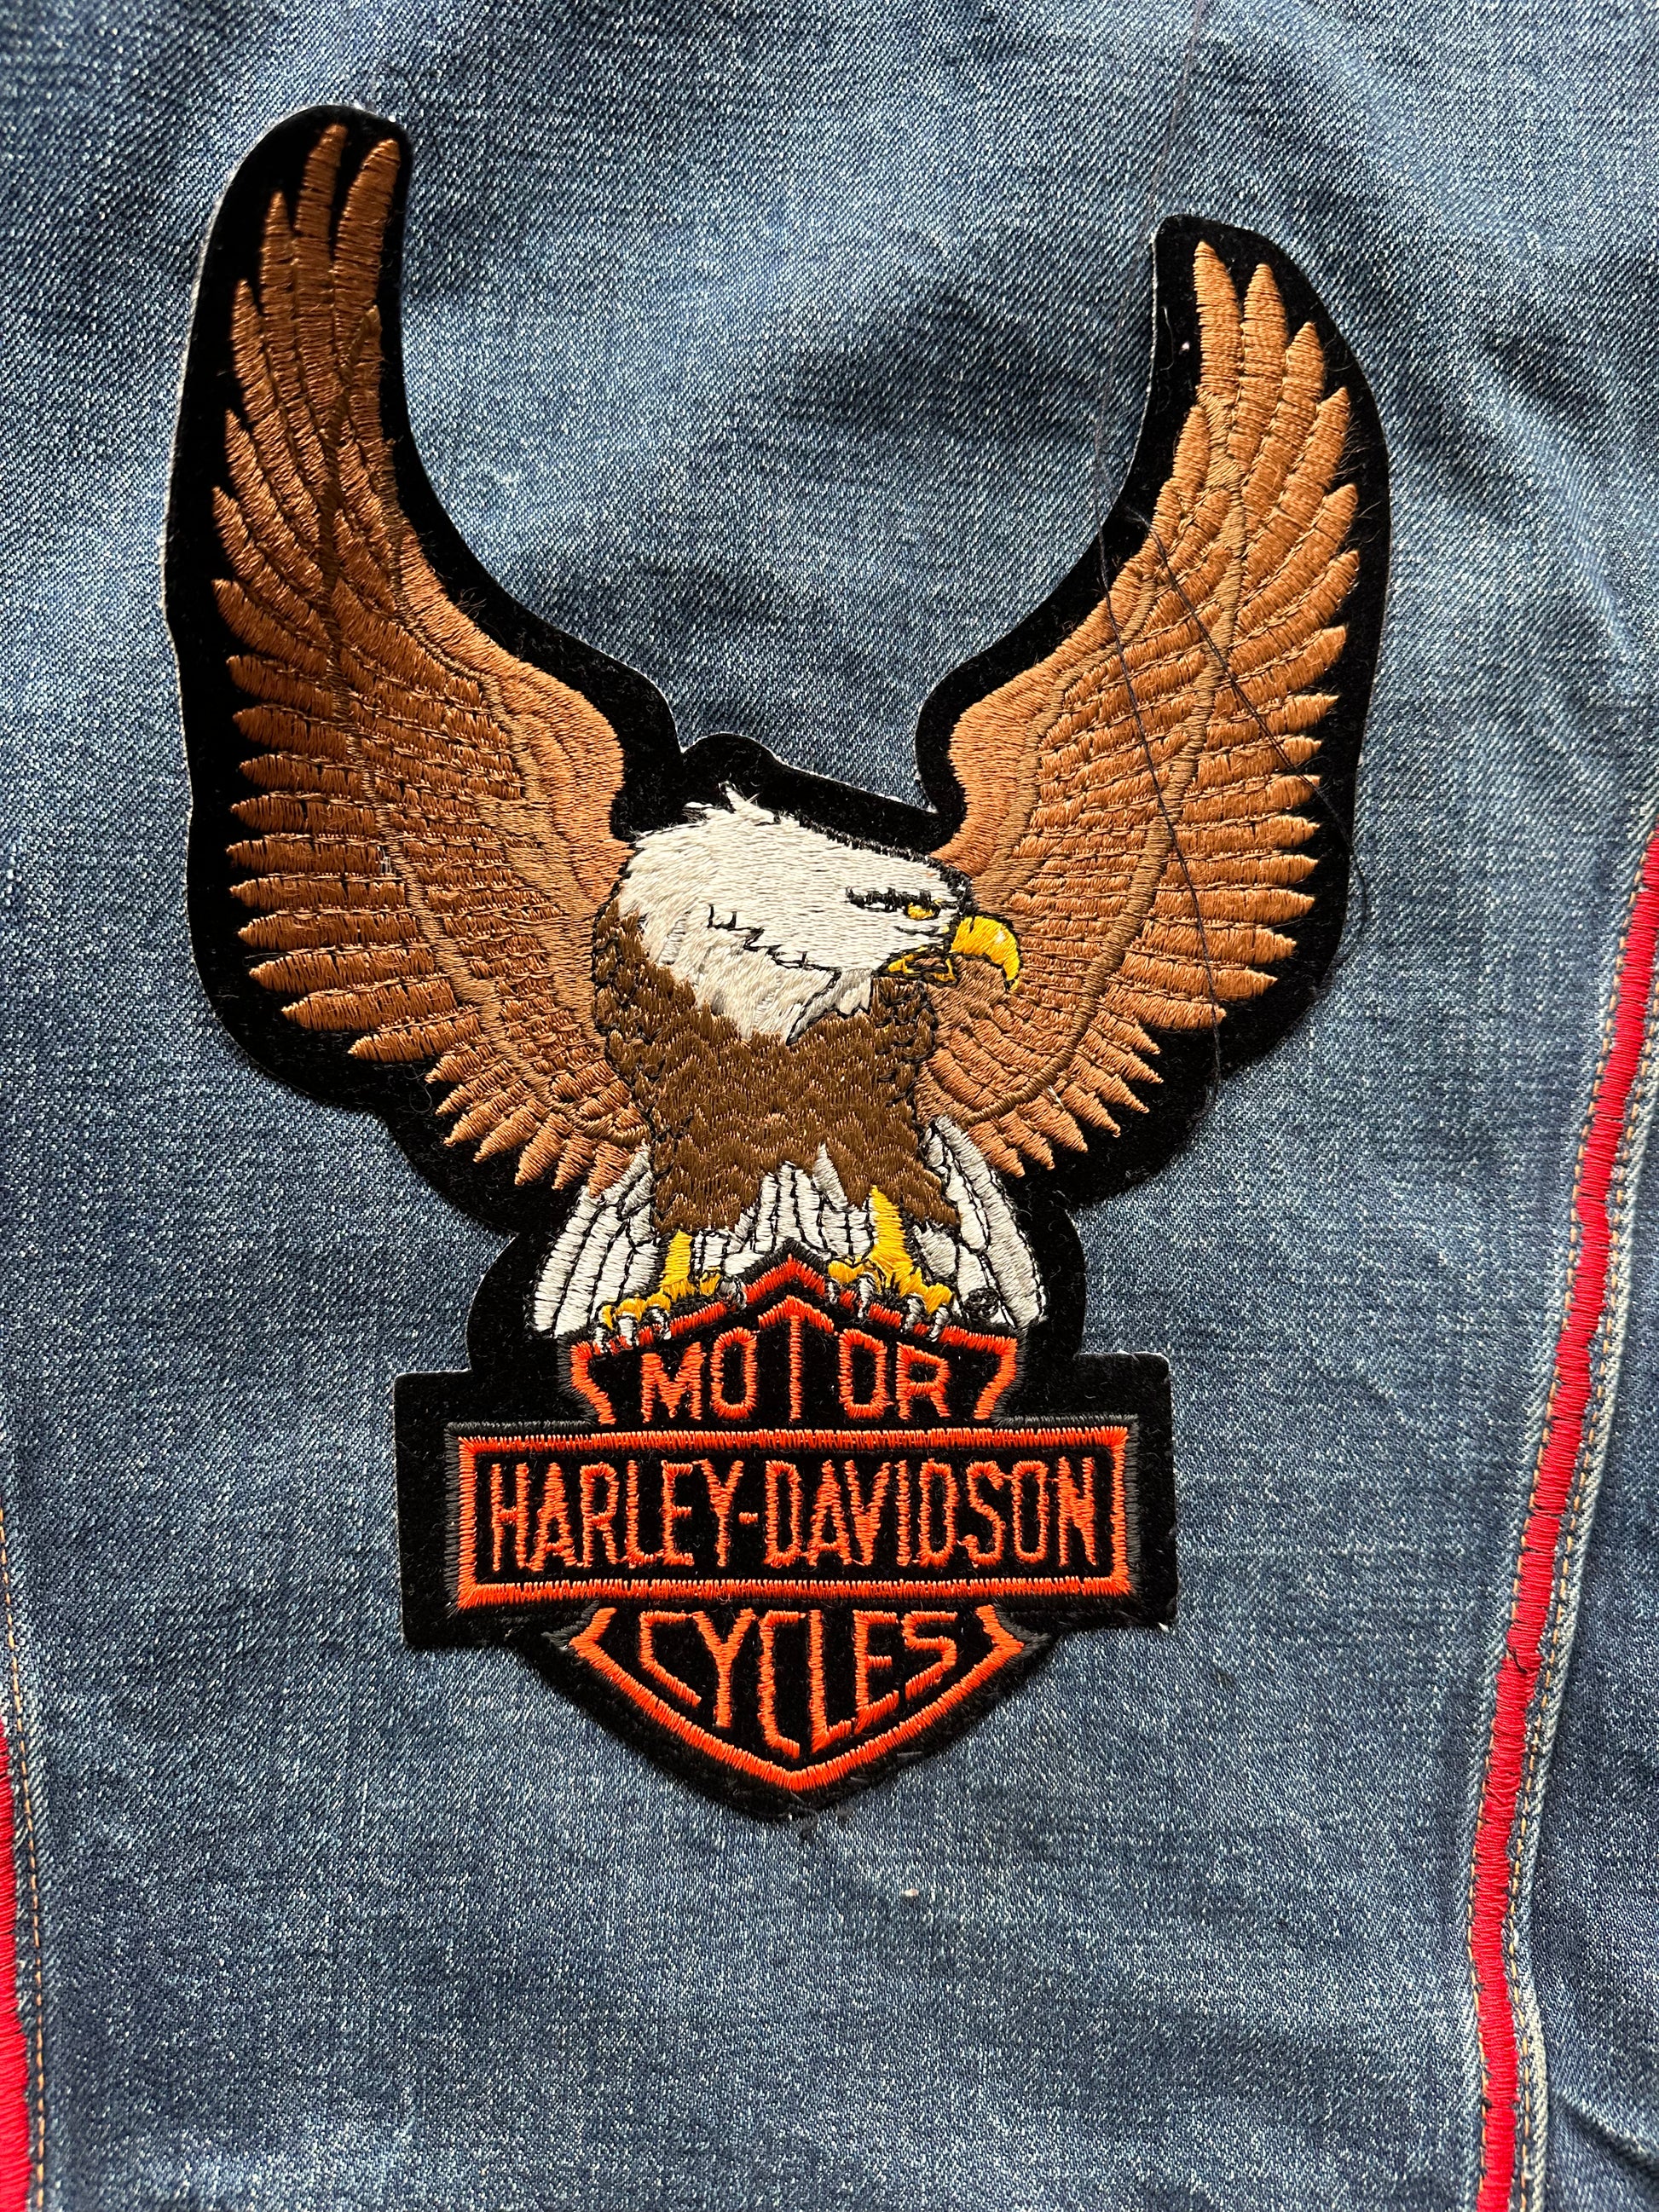 The Barn Owl Vintage Lee Rider 101-J Denim Jacket